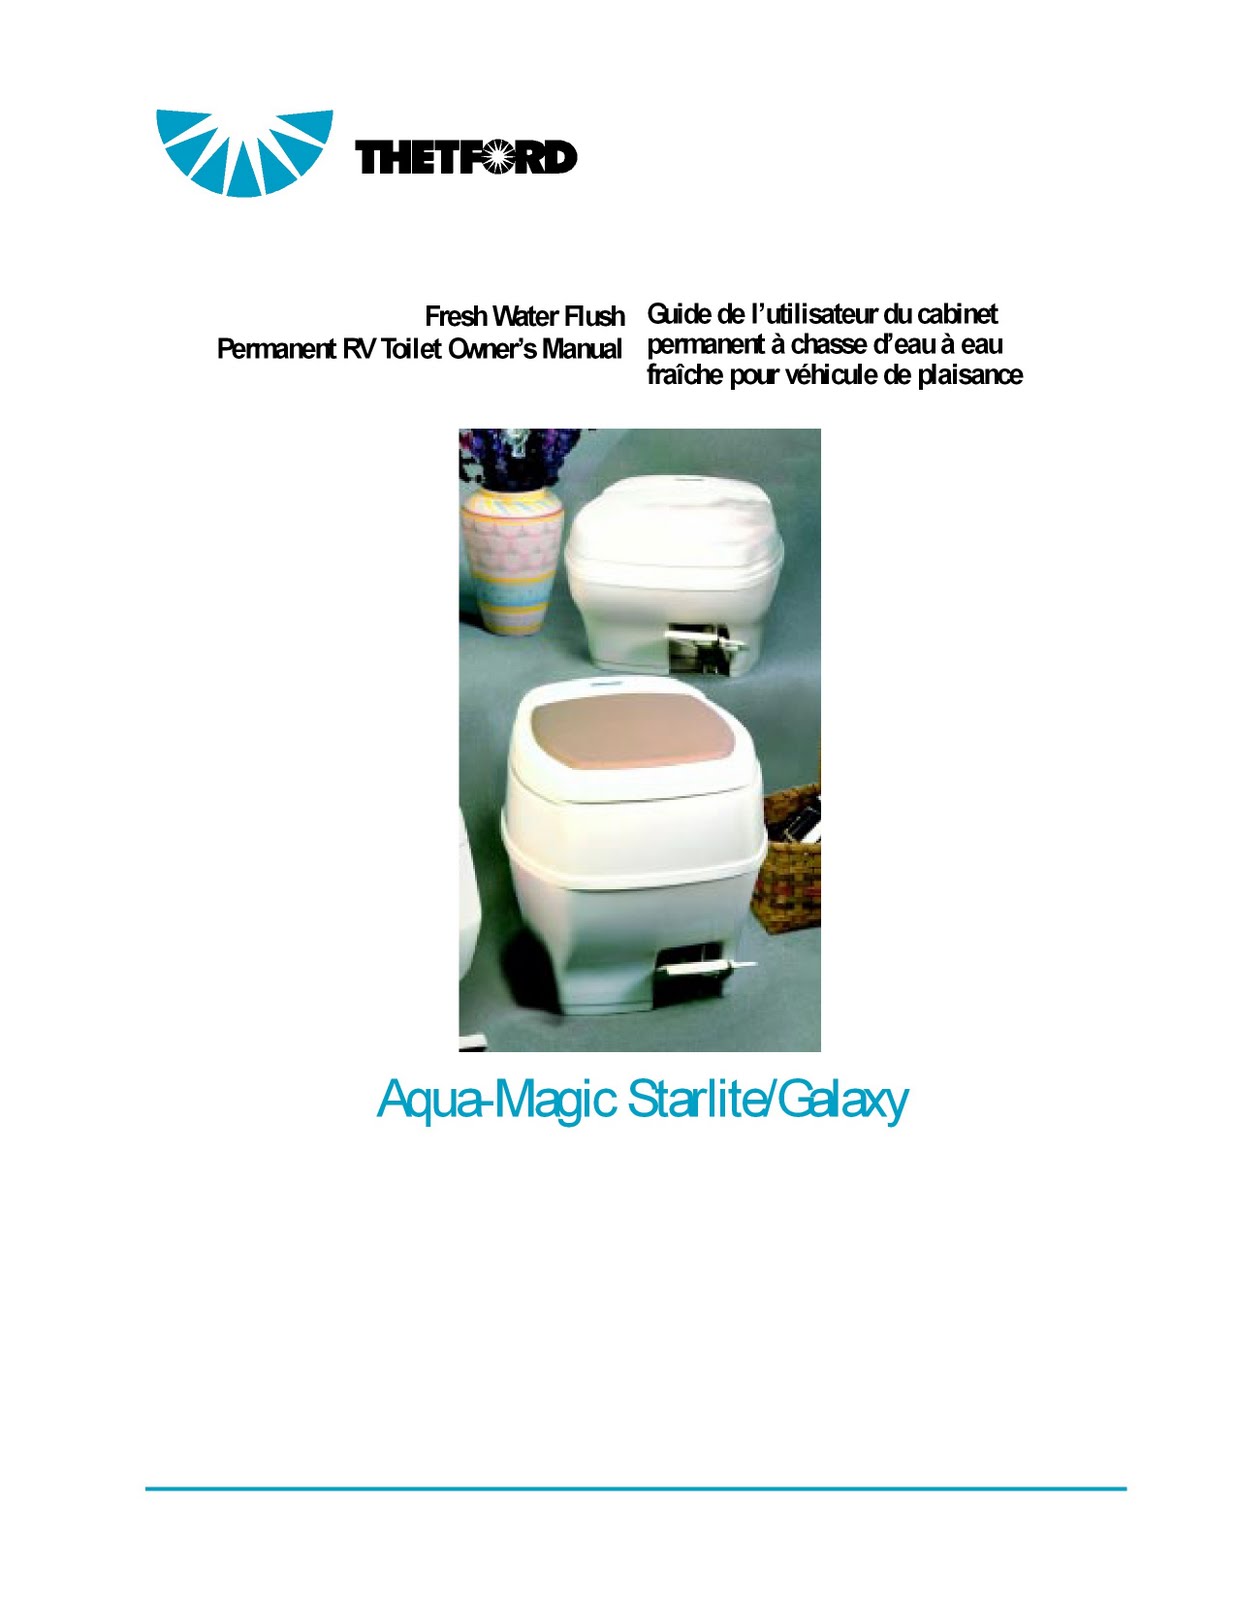 Aqua Star Owners Manual